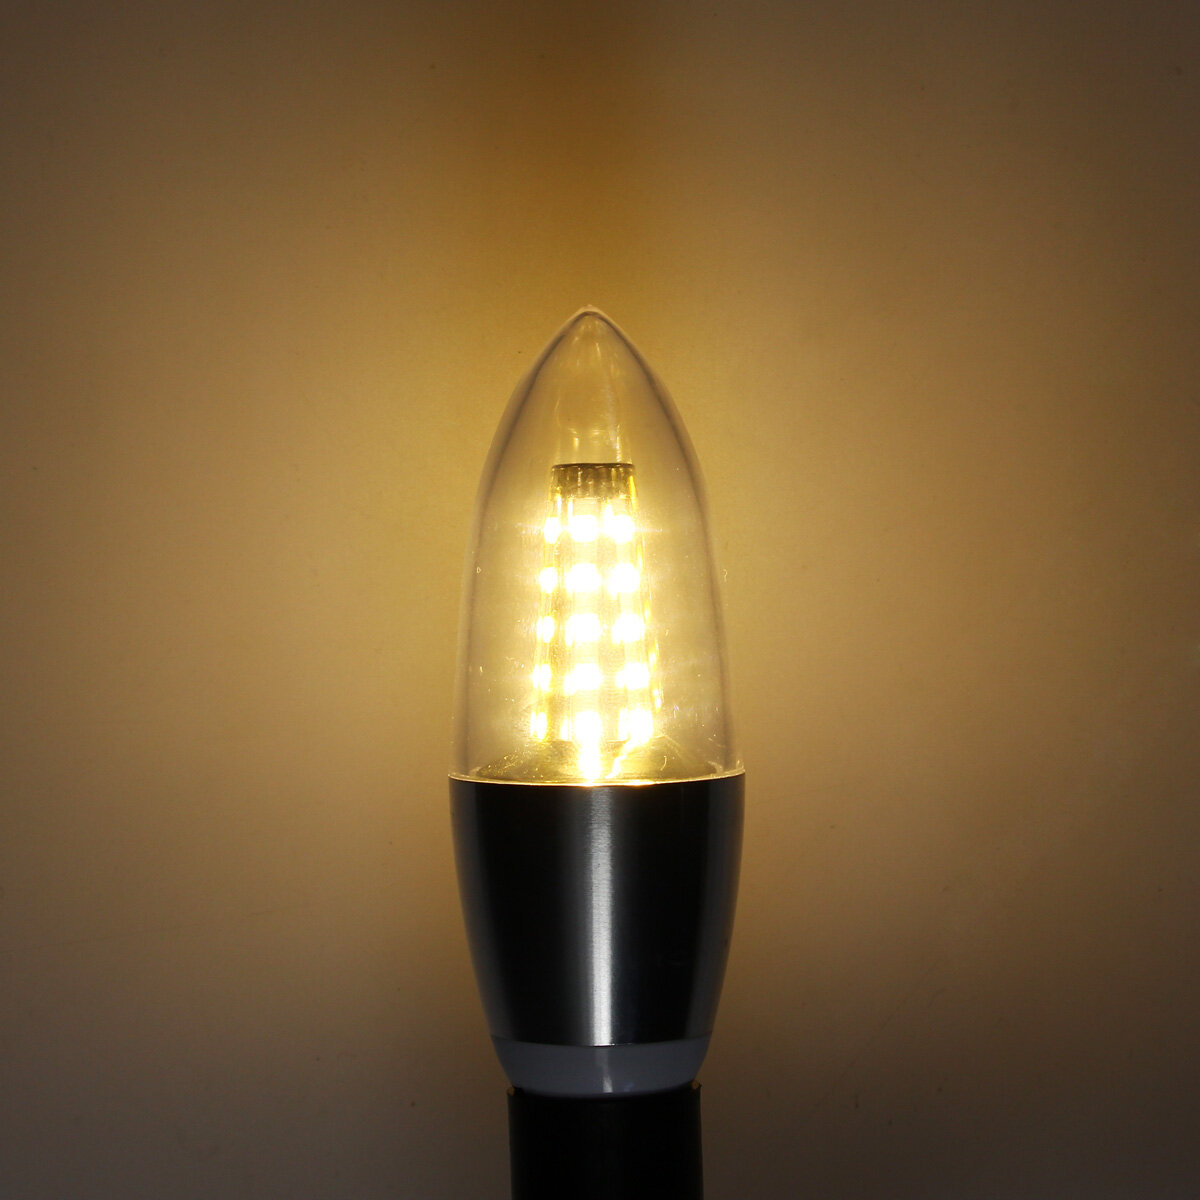 KingSo LED Filament Gloeilamp Warm Wit/Wit Licht 550LM E12 Kandelaar Basislamp 5.5W Gloeilamp Vervan